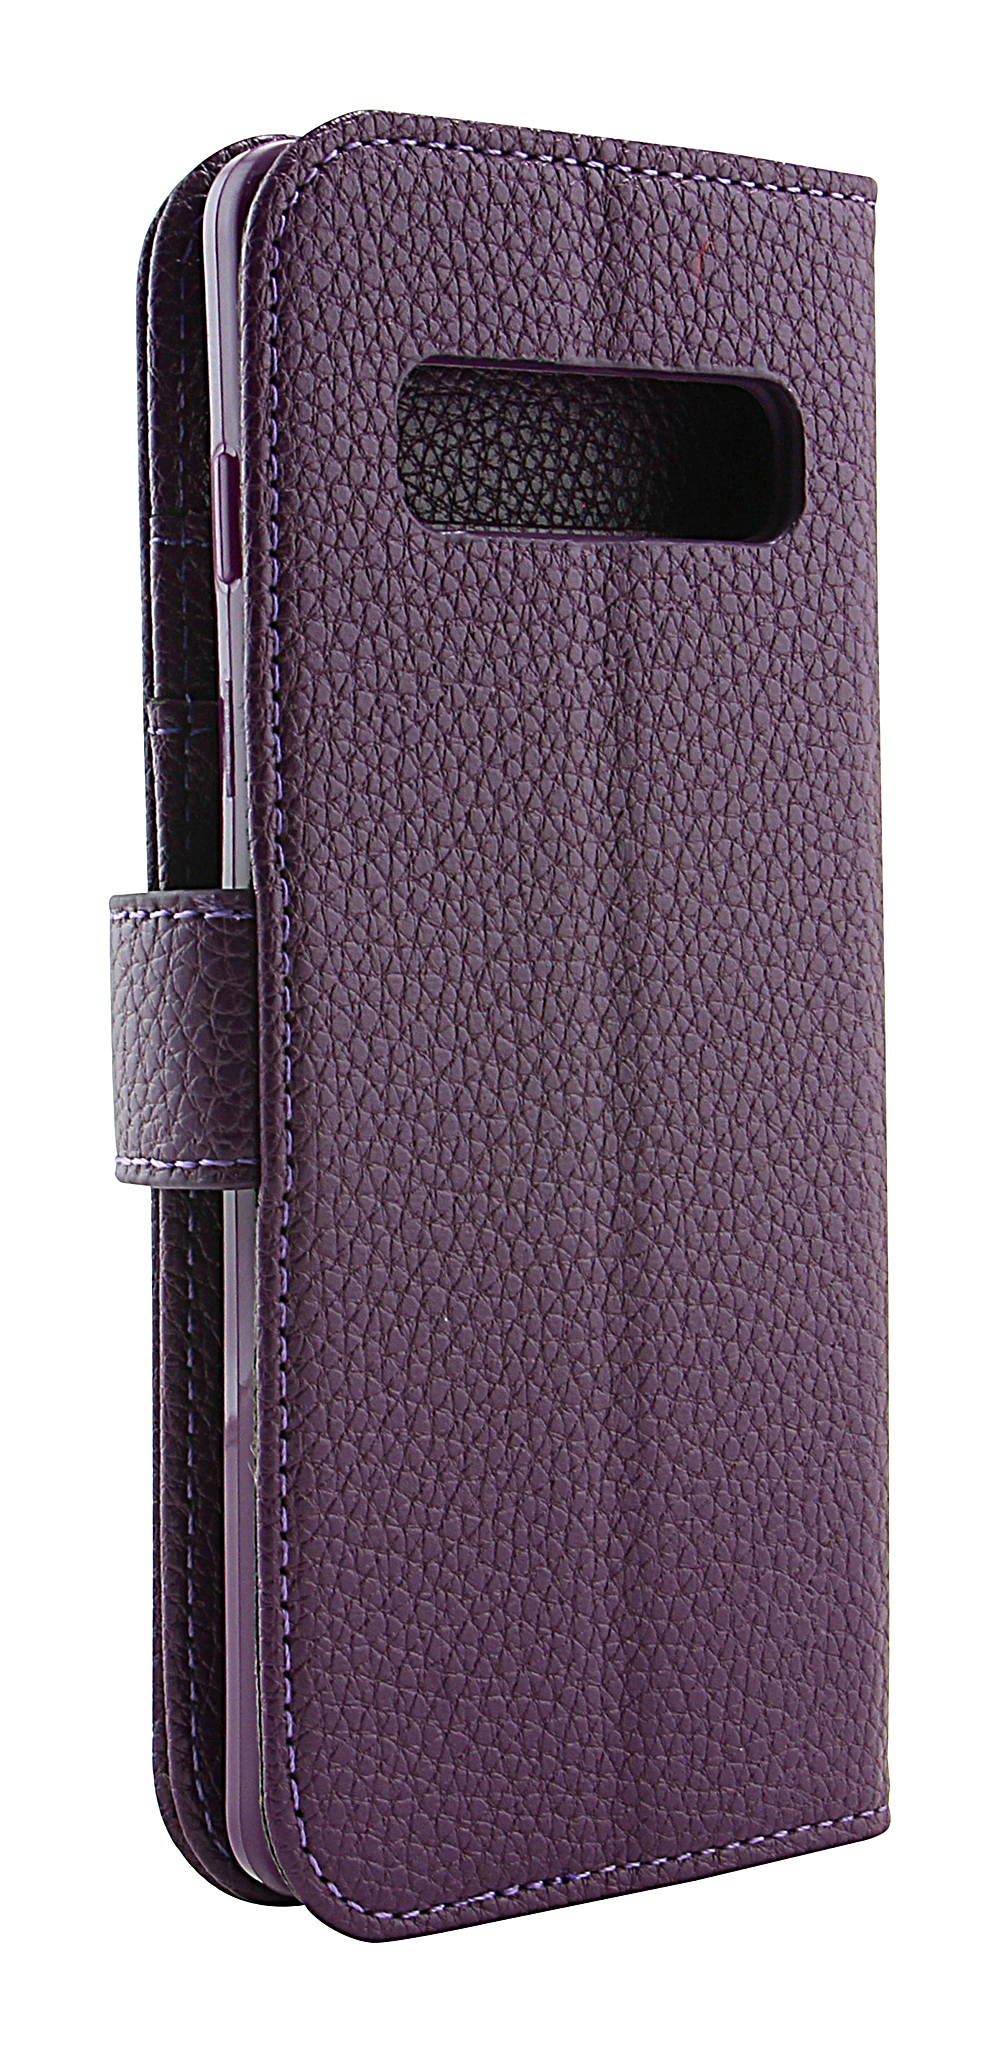 Standcase Wallet Samsung Galaxy S10 (G973F)